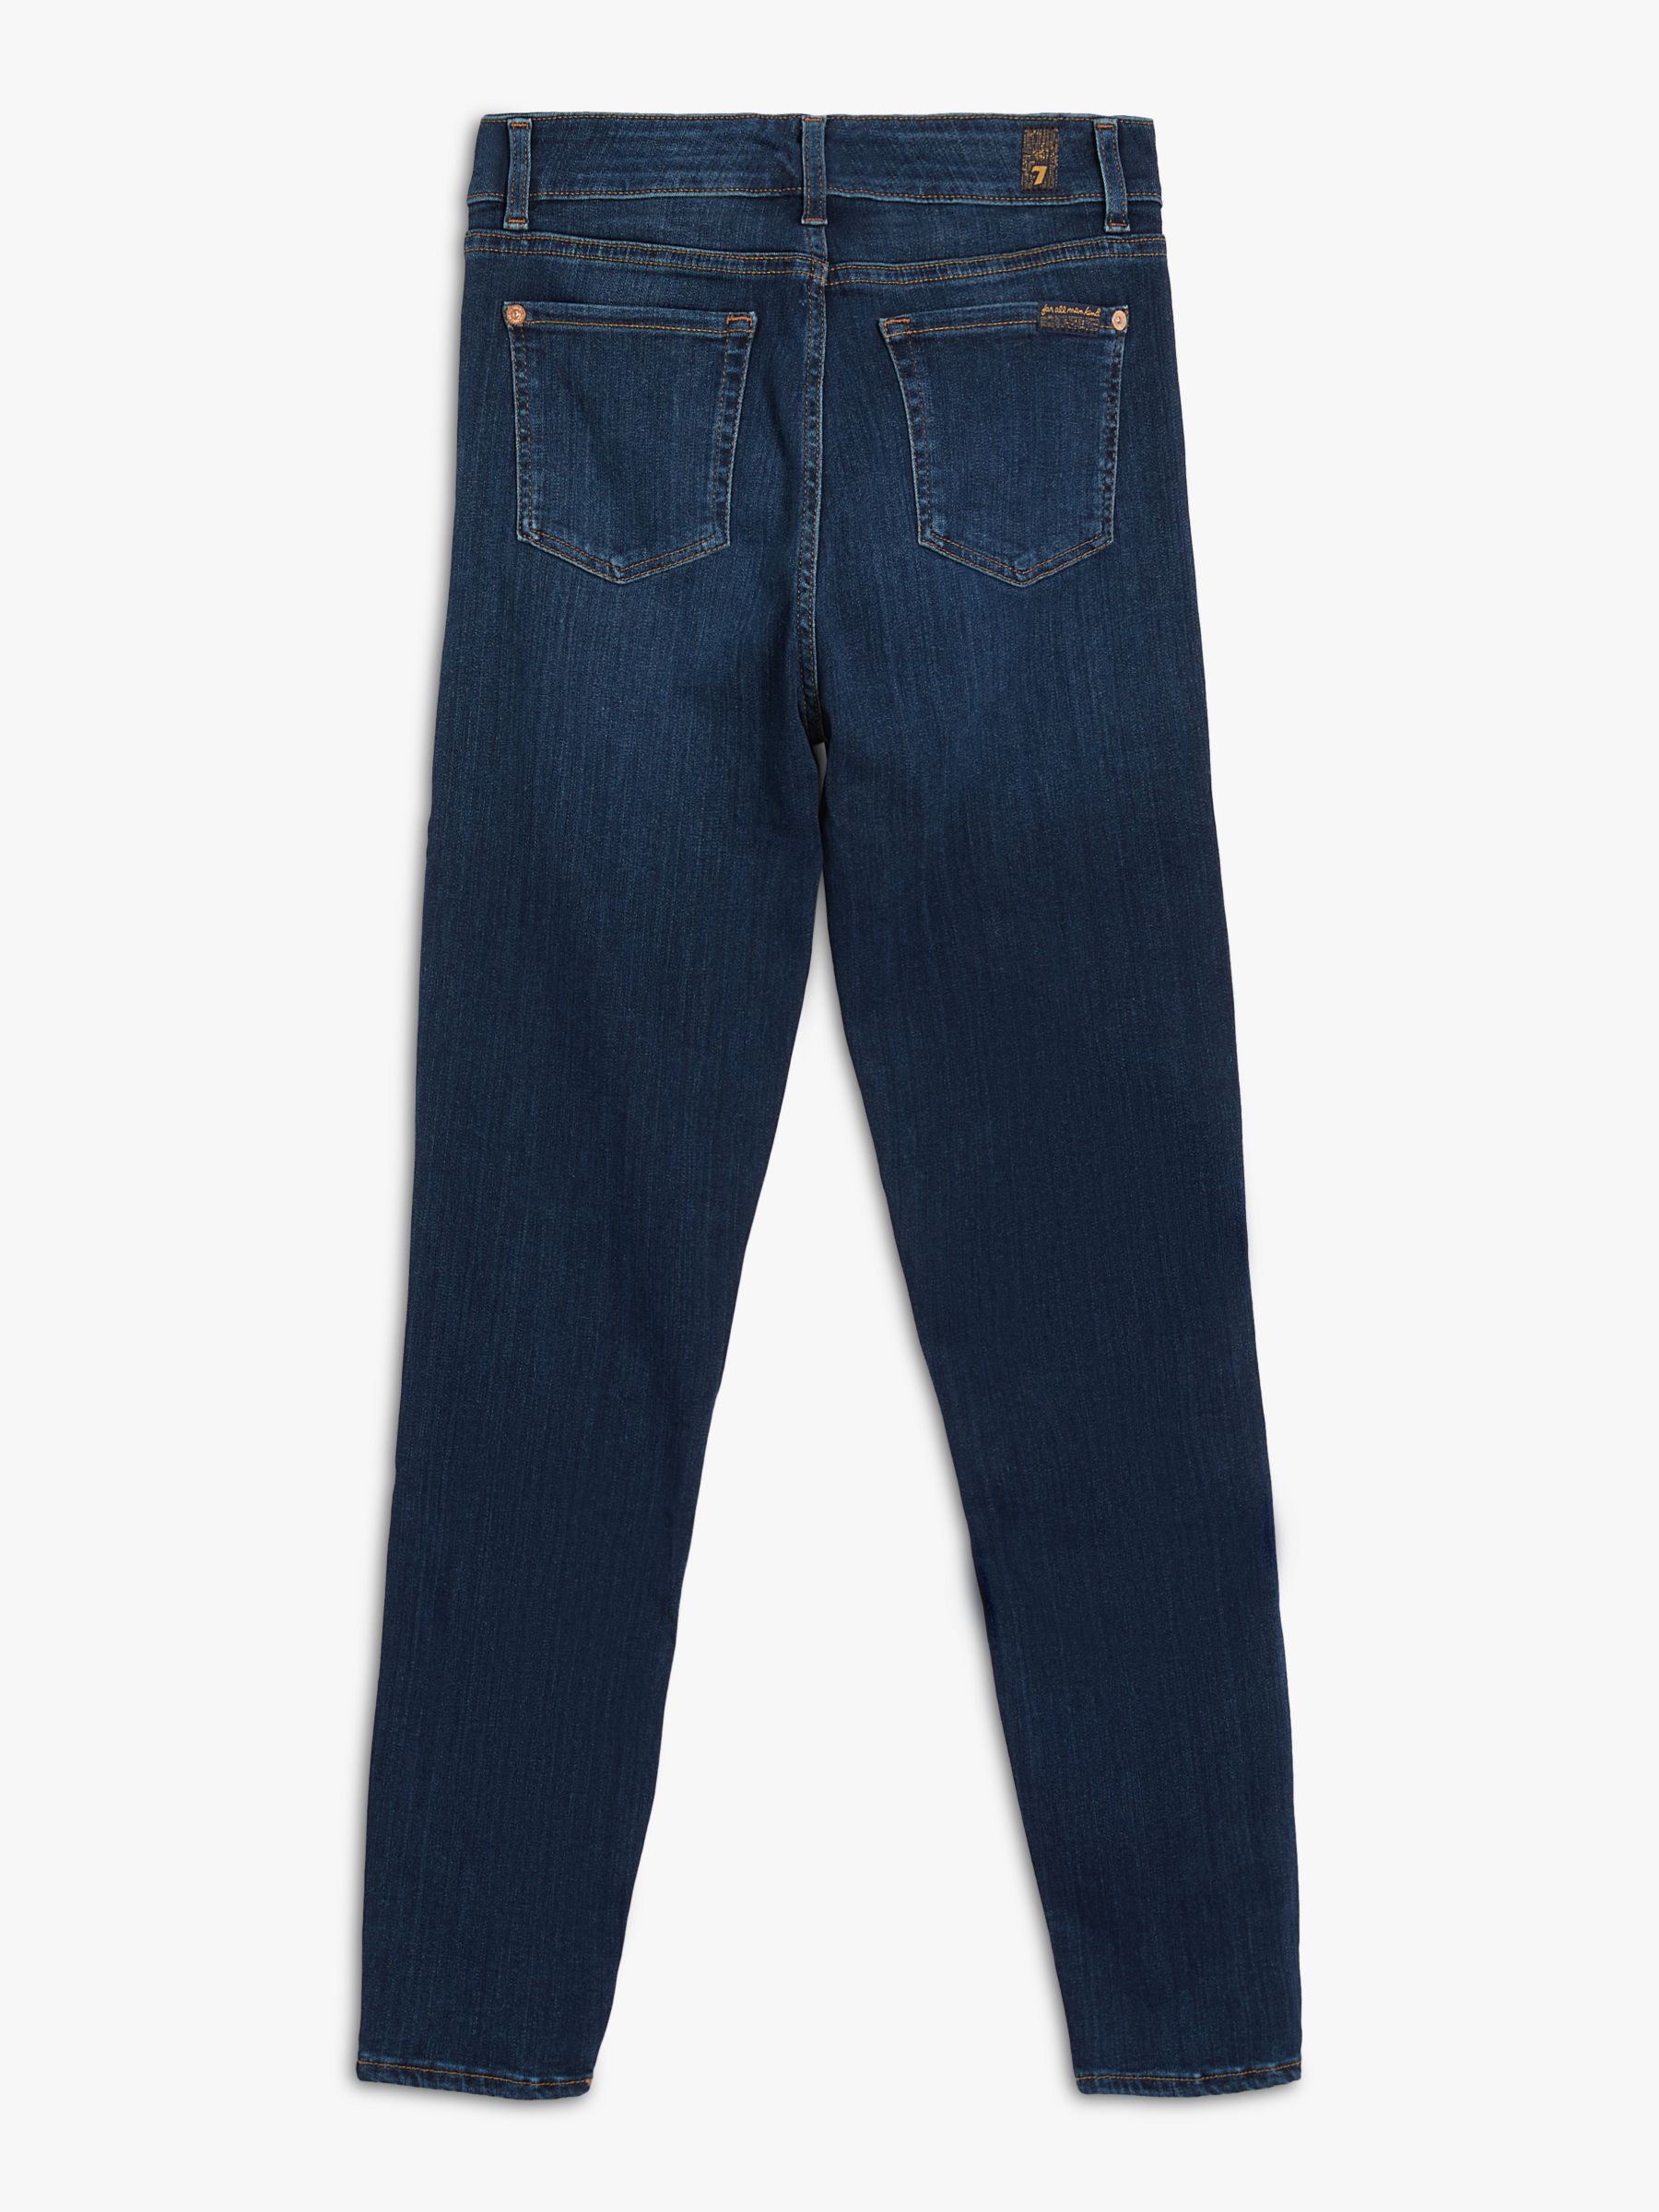 7 For All Mankind Aubrey Slim Illusion Luxe Jeans, Dark Blue, 27